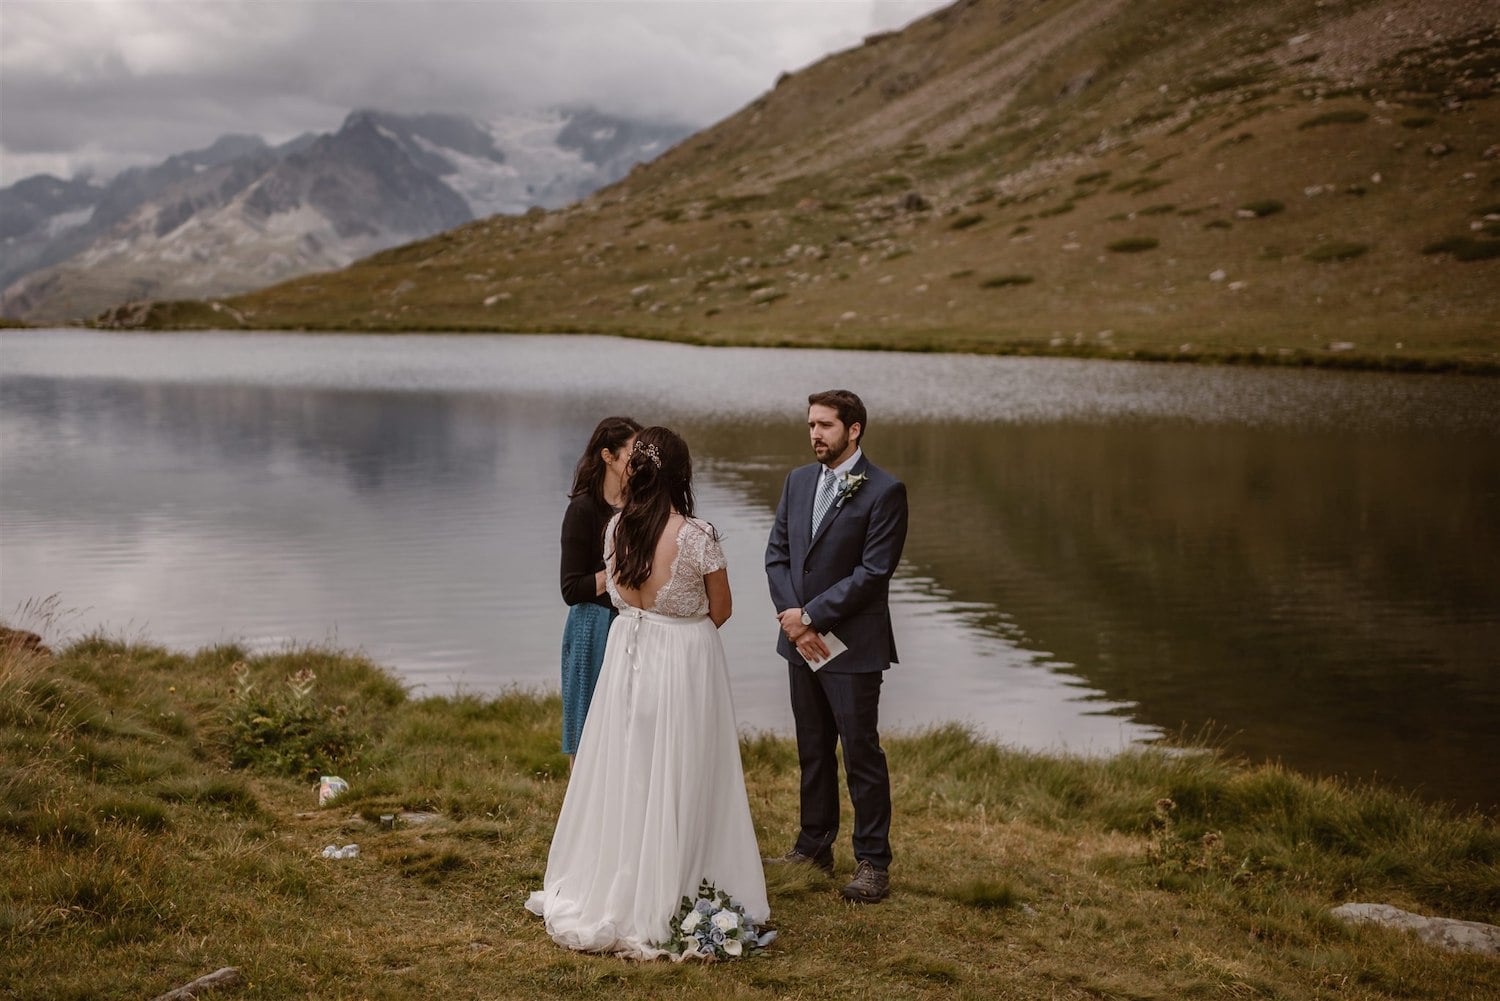 Amazing marriage ceremony and landscape in Zermatt, Switzerland